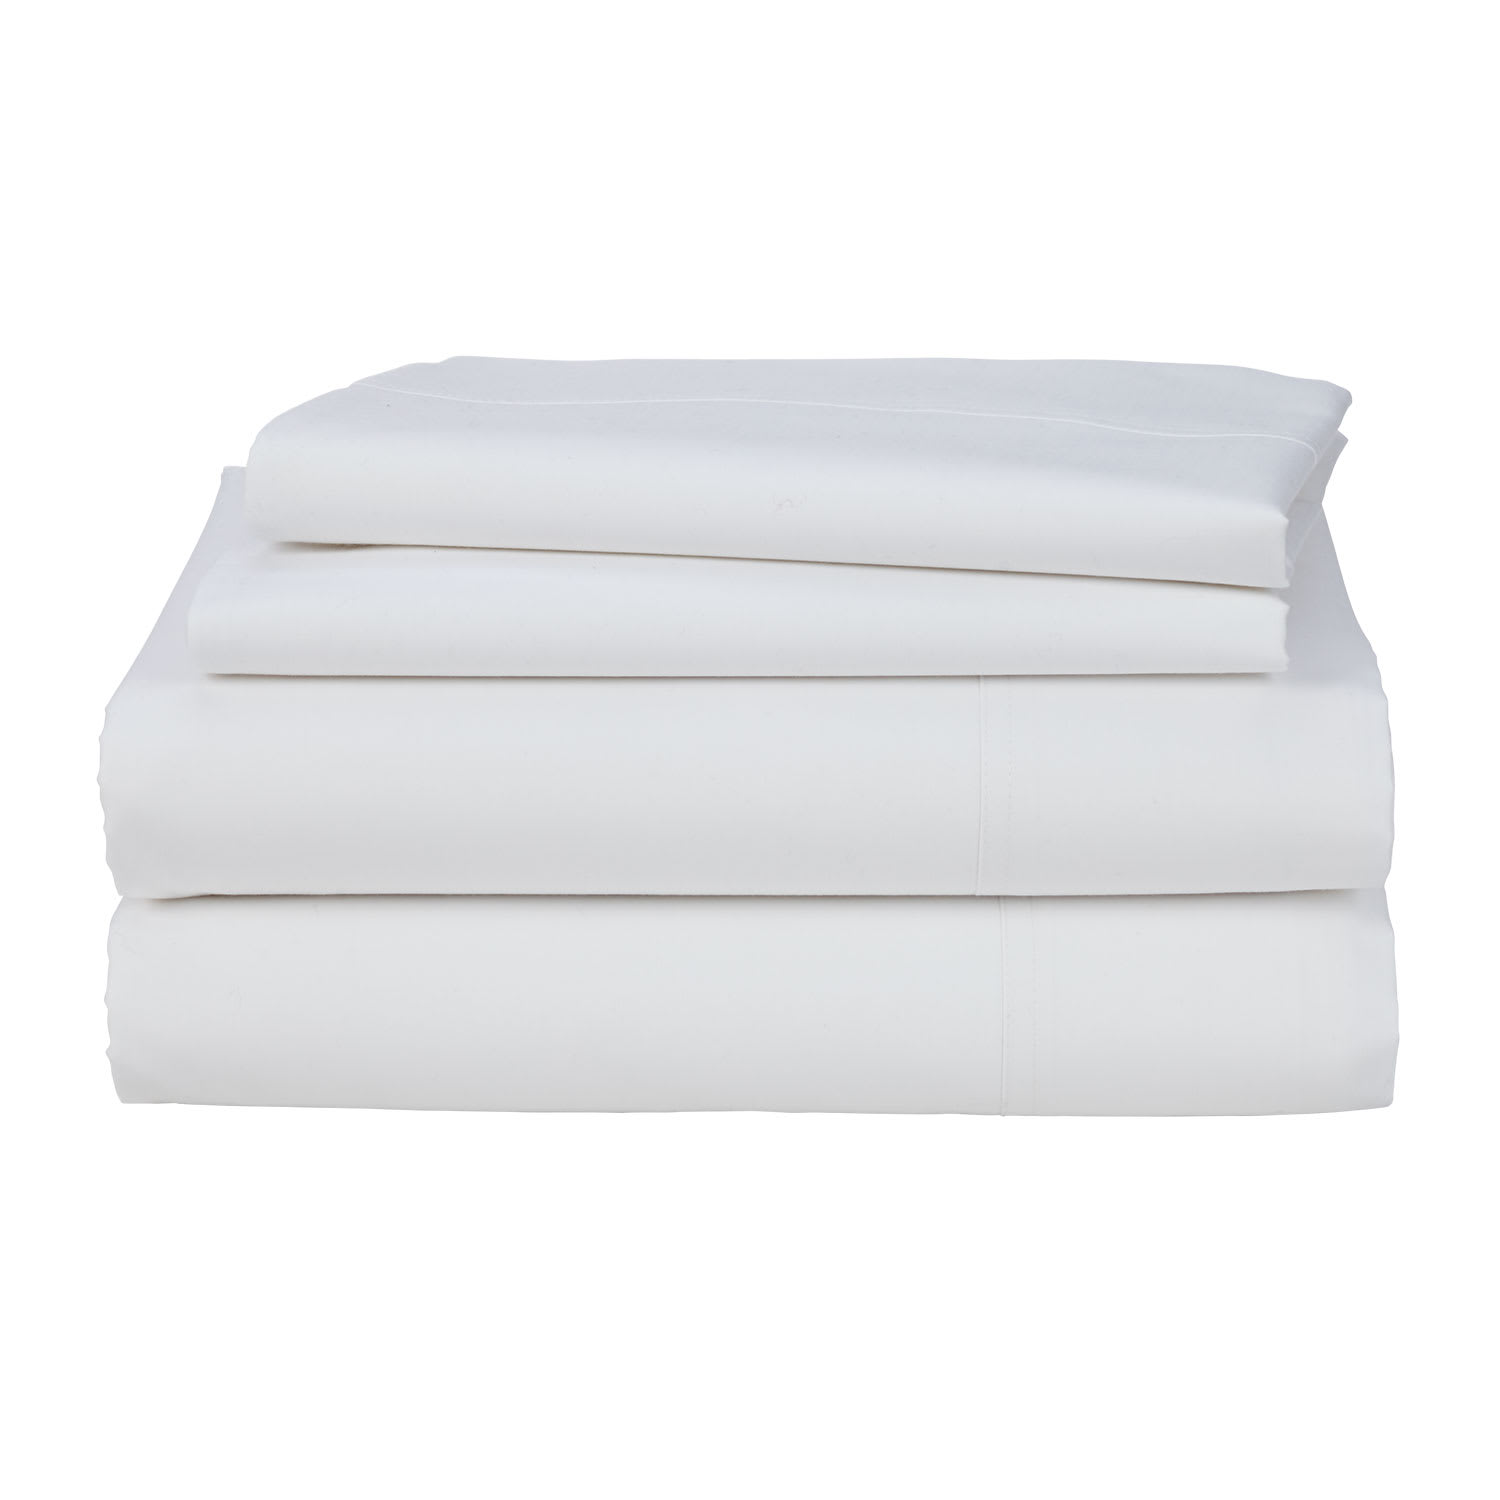 Cstudio Home Organic Cotton Percale Sheet Set - White